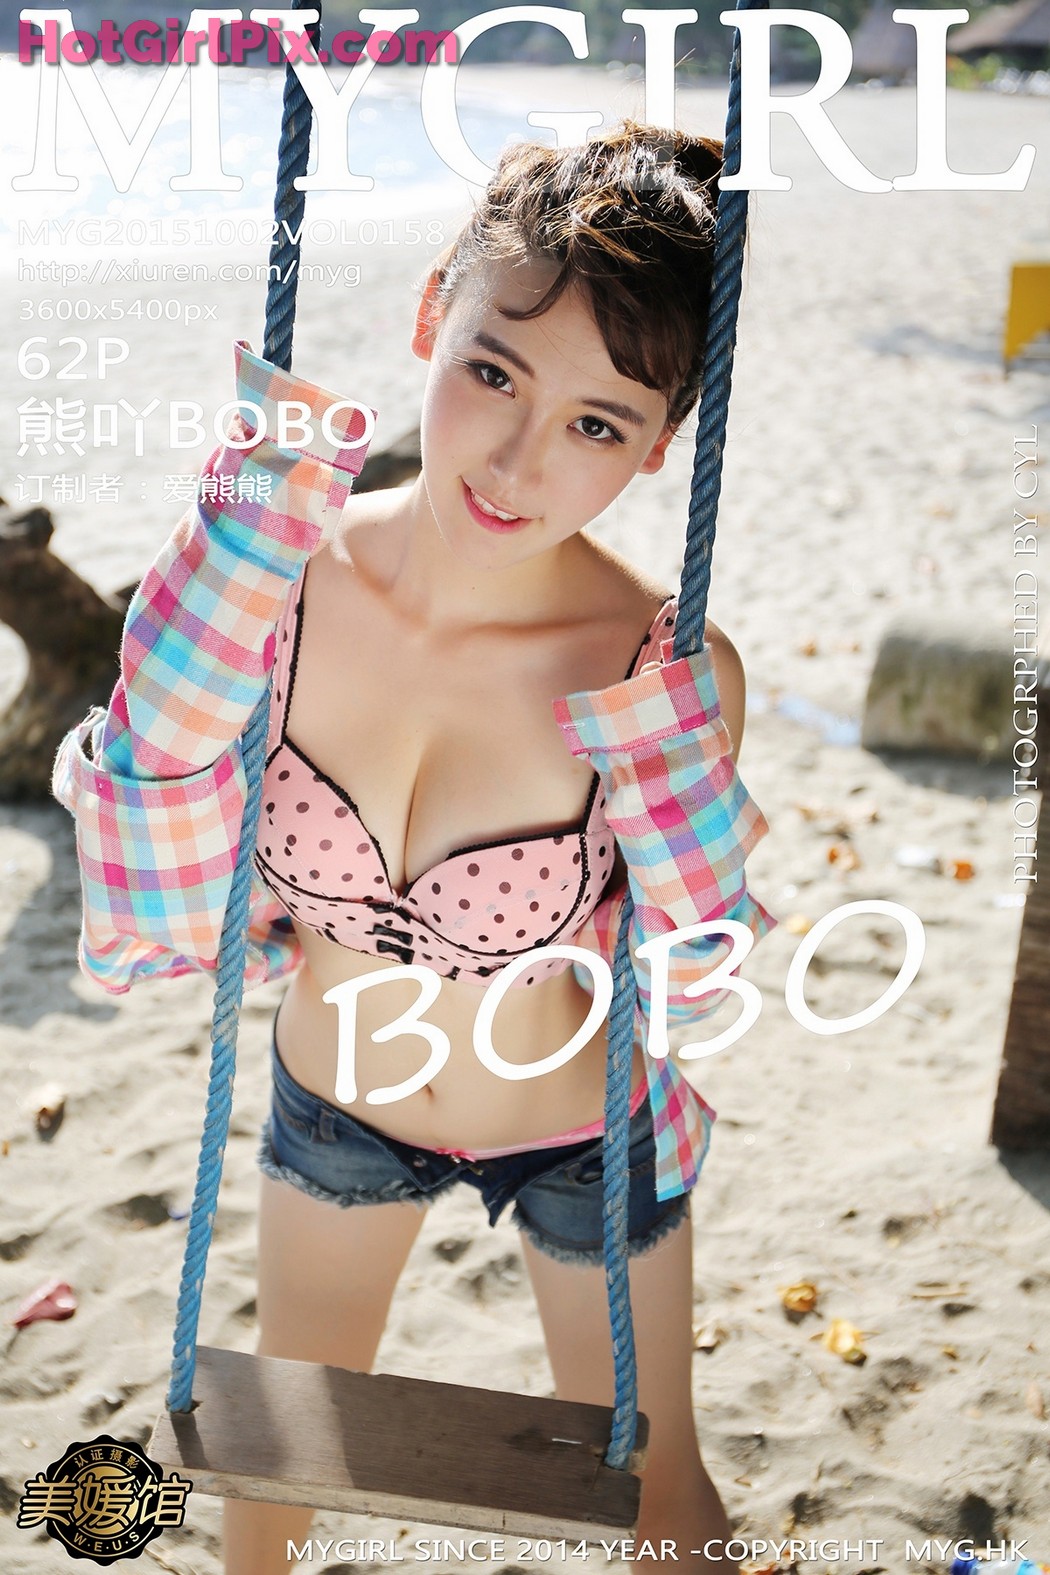 [MyGirl] VOL.158 Xiong Ya 熊吖BOBO